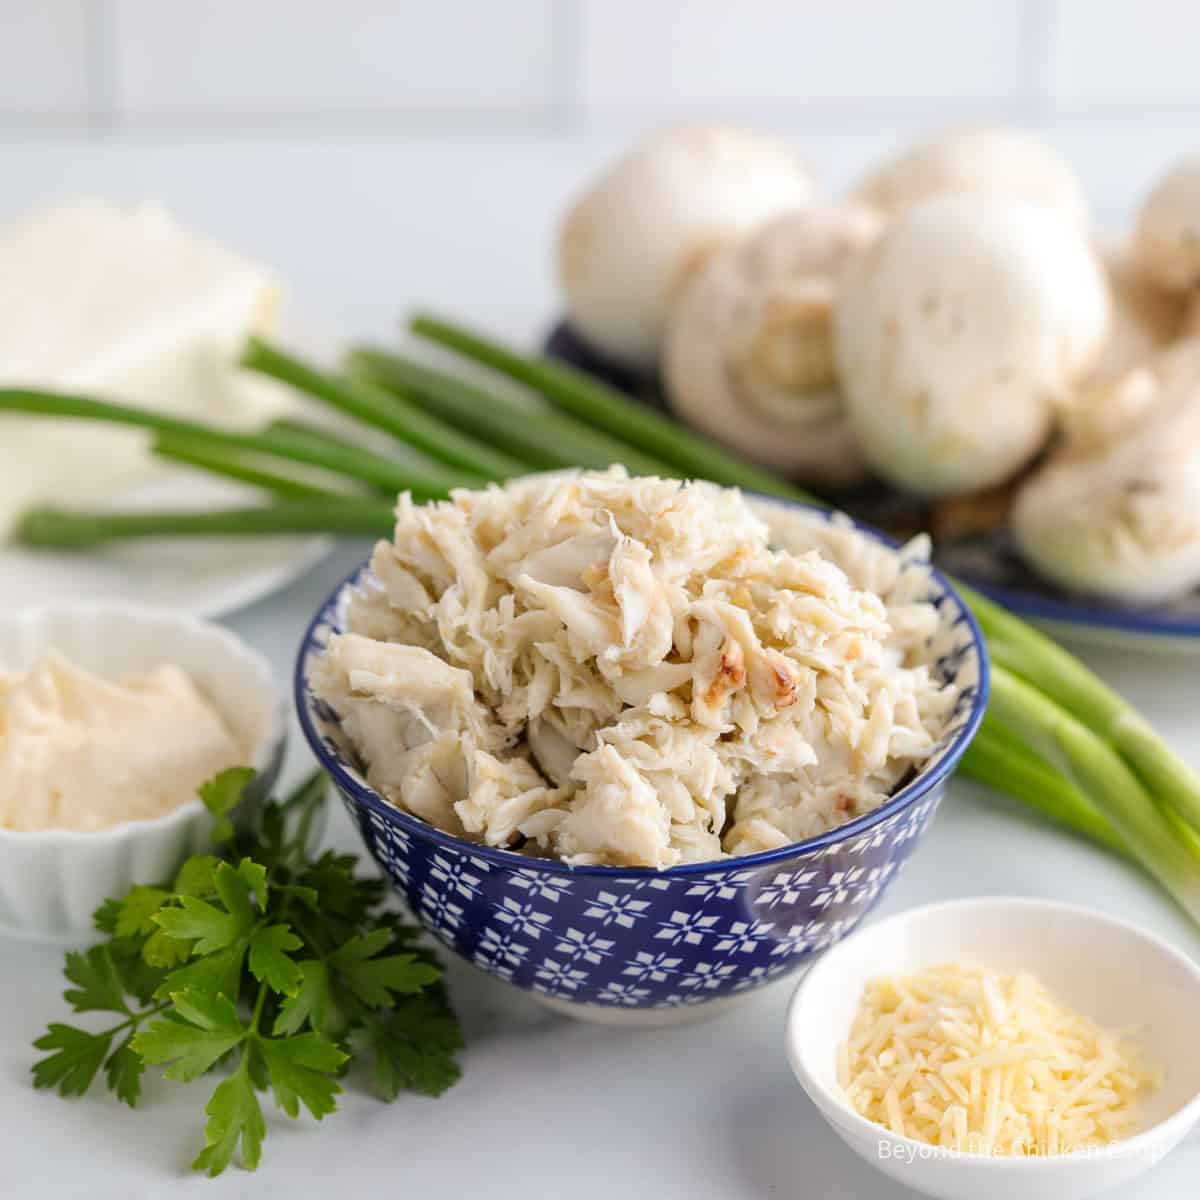 Ingredients for making crab stuffed mushrooms.